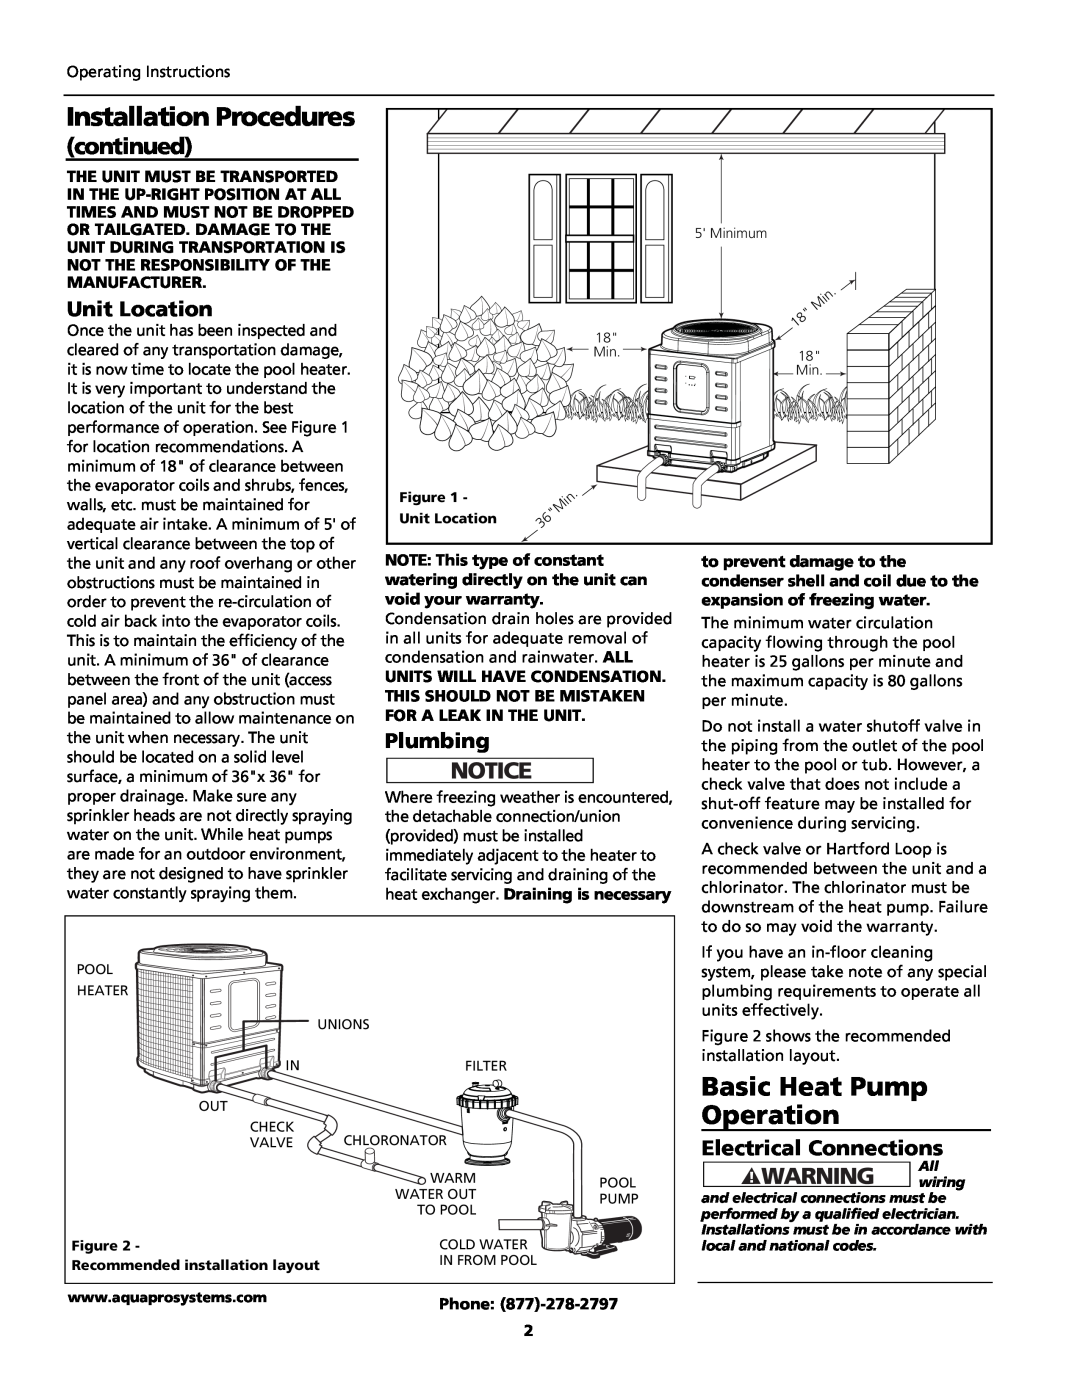 AquaPRO PRO1300 Basic Heat Pump, Operation, Unit Location, Plumbing, Electrical Connections, Installation Procedures 